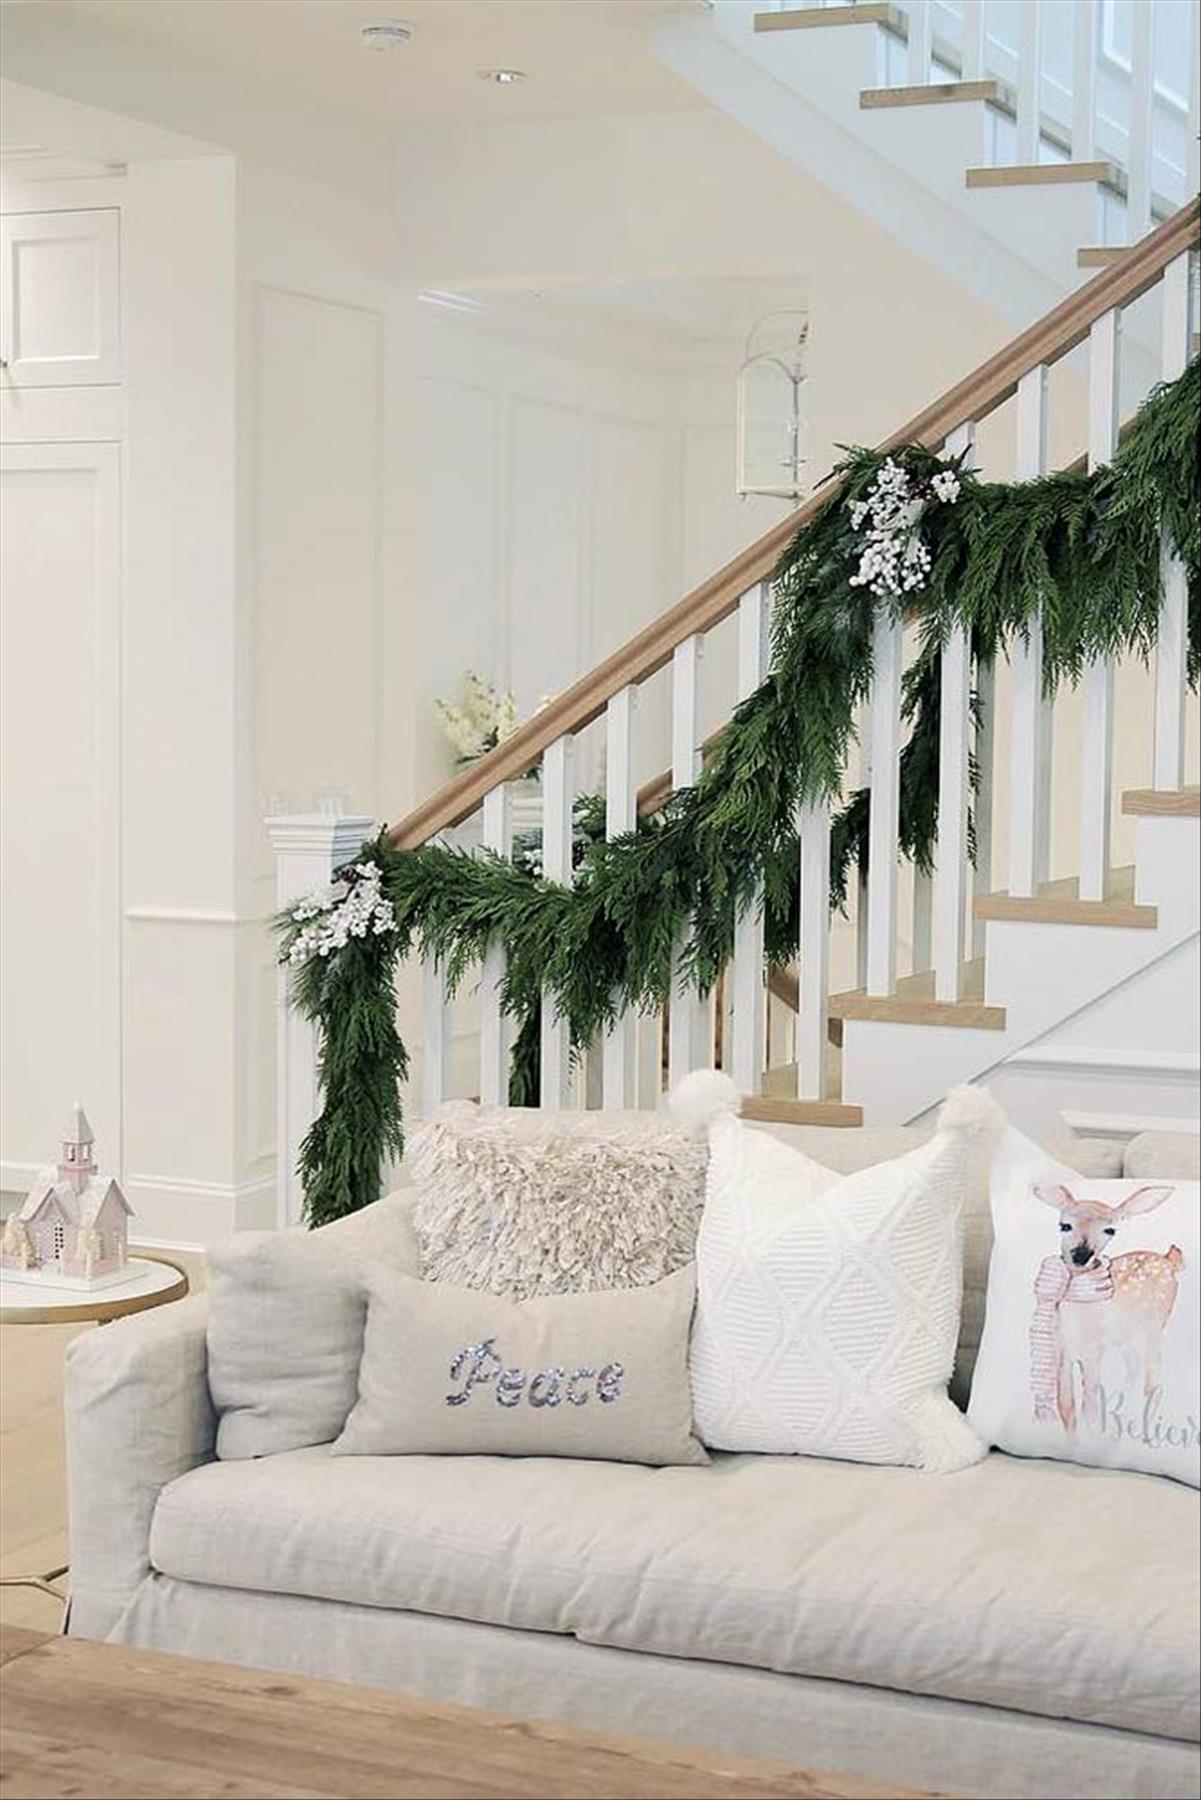 Spectacular Christmas garlands decor ideas